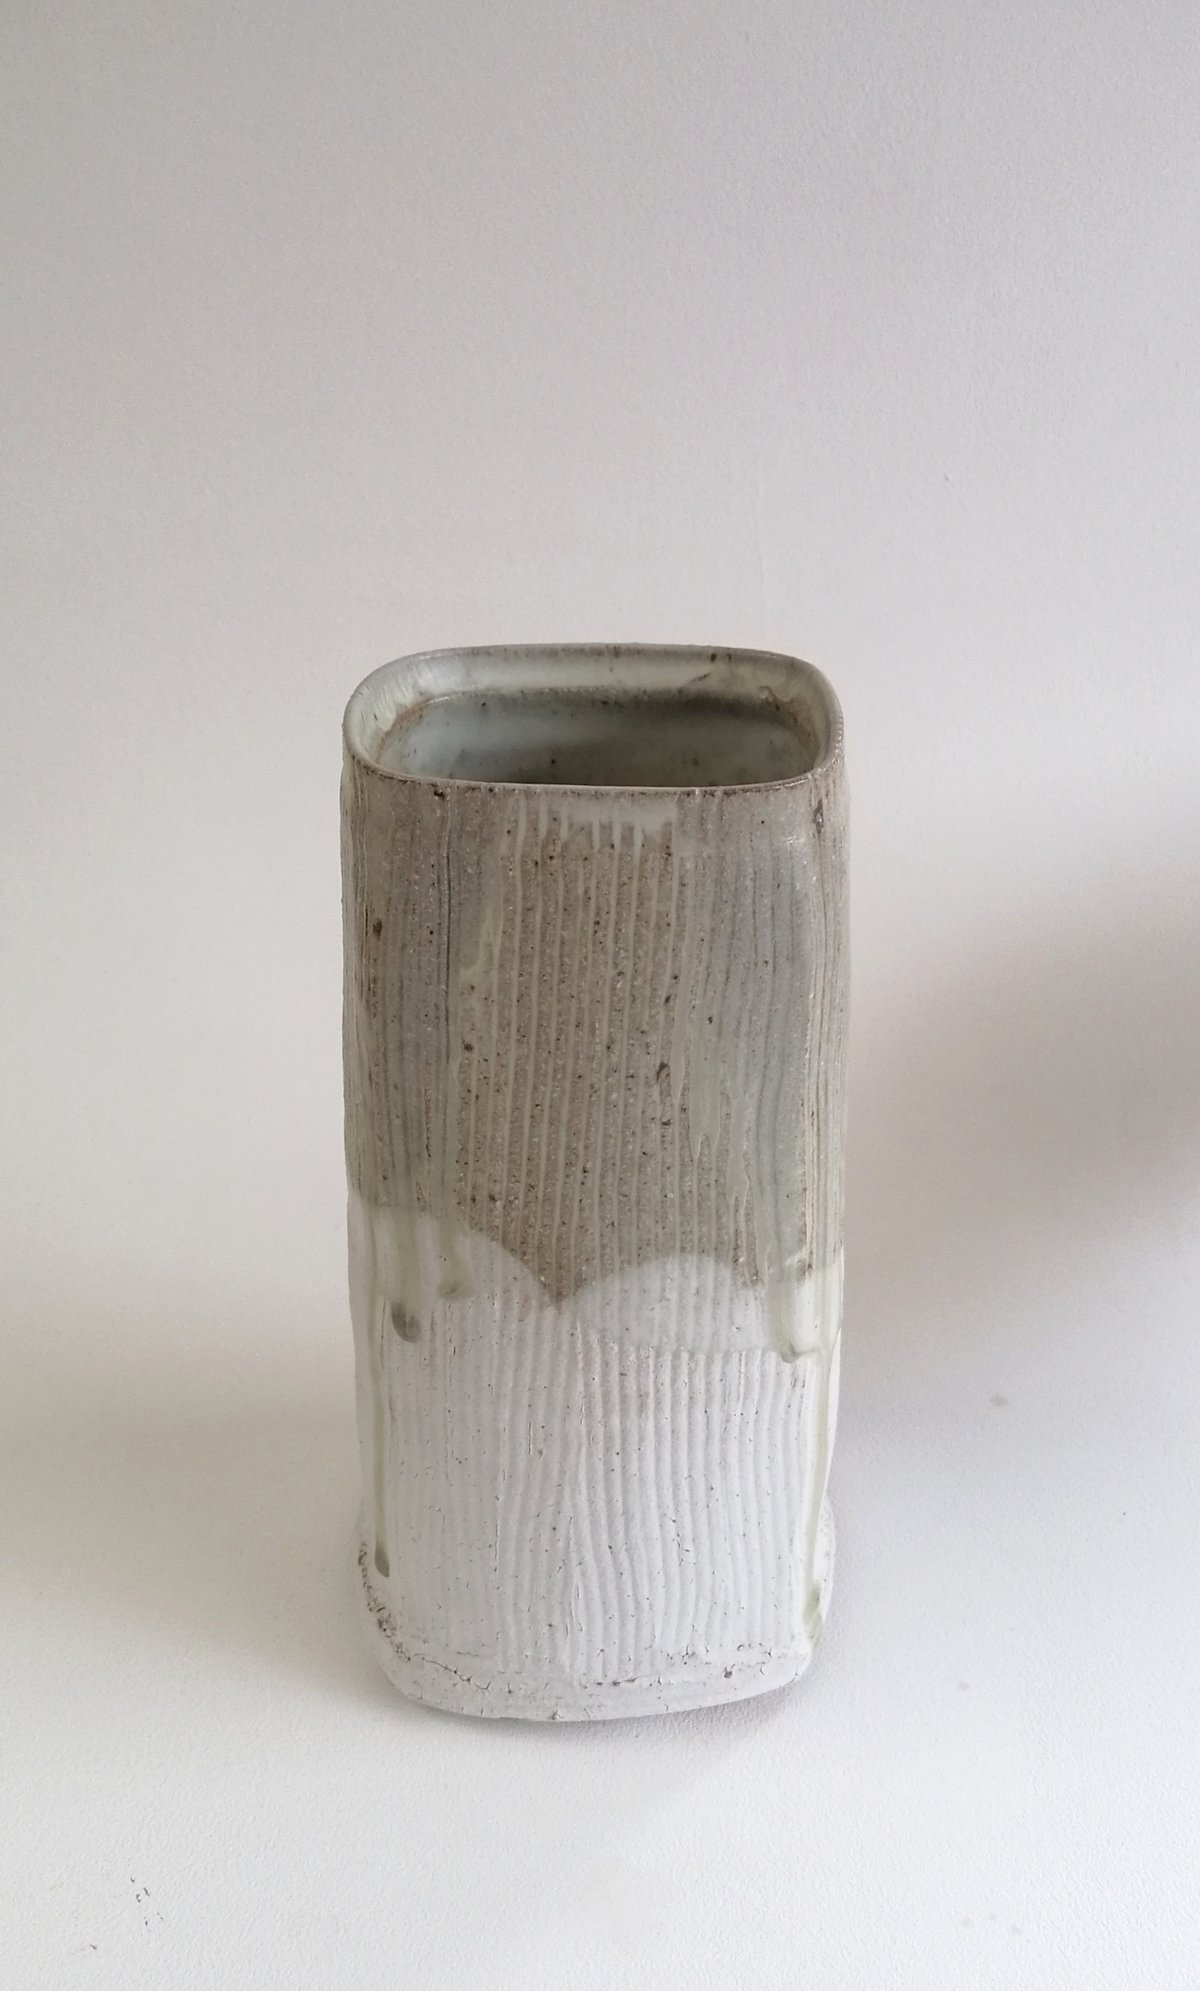 Image of Squared vase/large utensil pot. Sale item